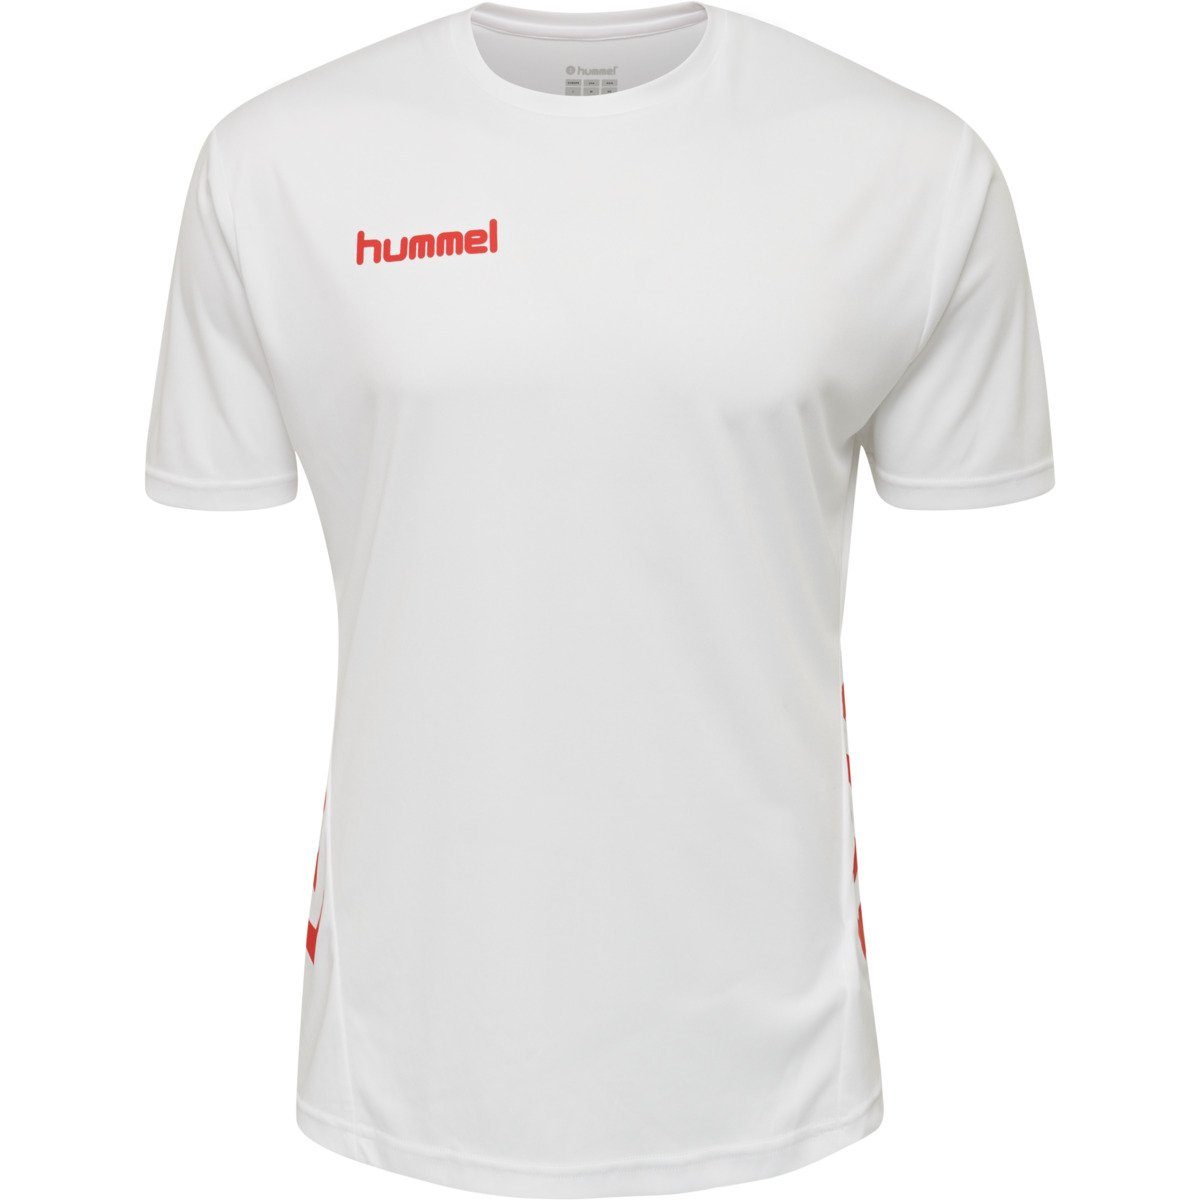 hummel T-Shirt Promo Duo Set, 1x RED Jr. Trikotset Trikot) WHITE/TRUE Short 1x (Duo